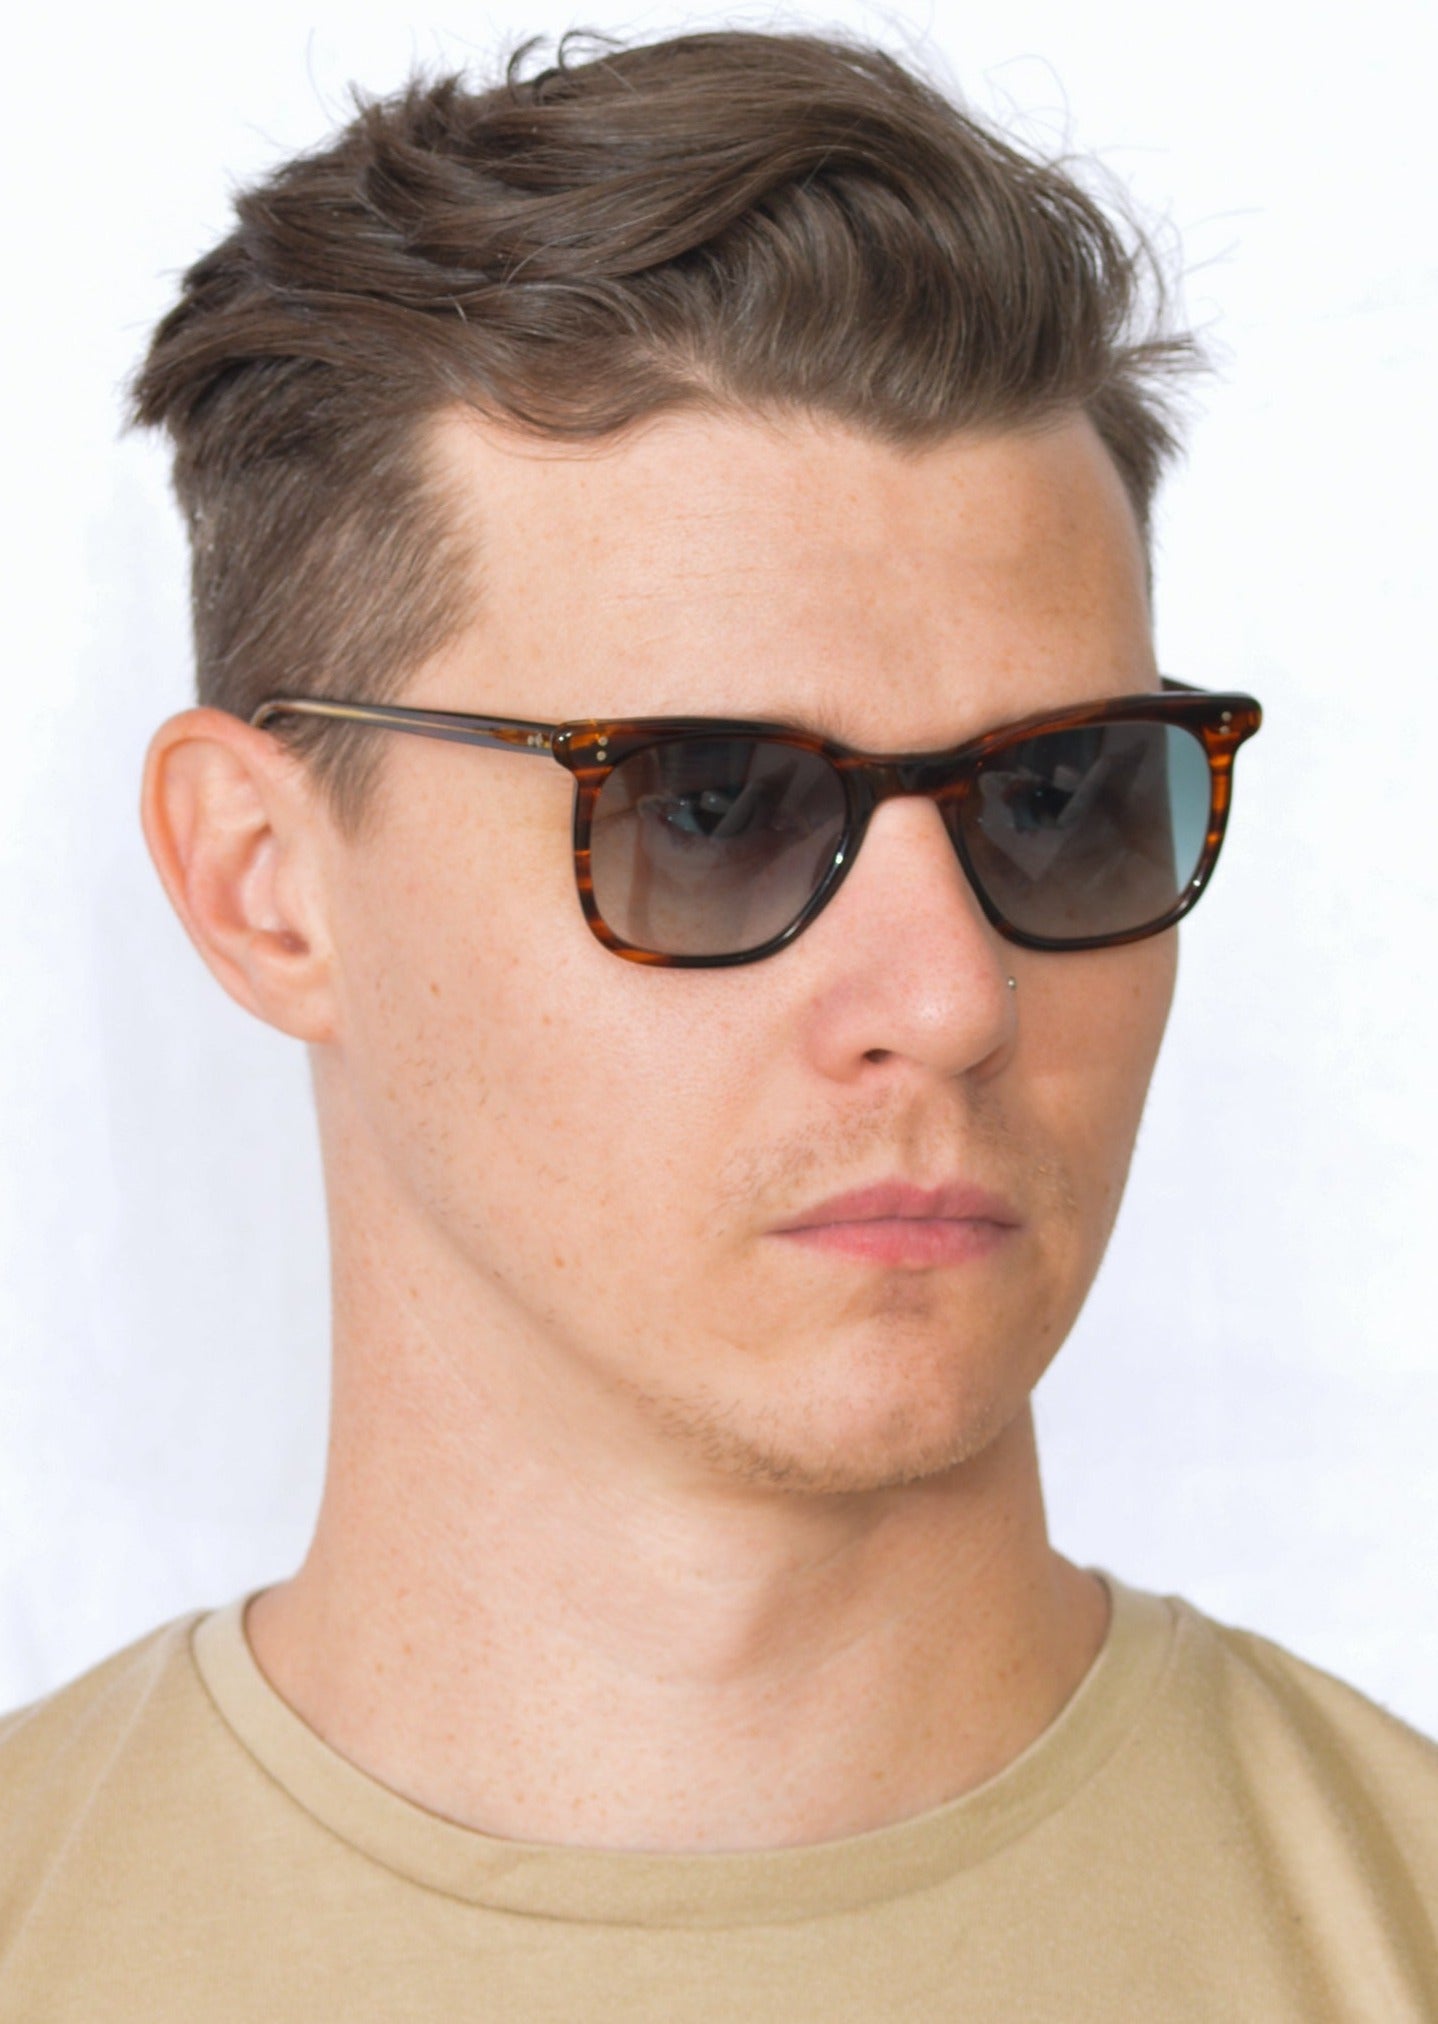 Shop Selected Homme Men's Sunglasses up to 50% Off | DealDoodle